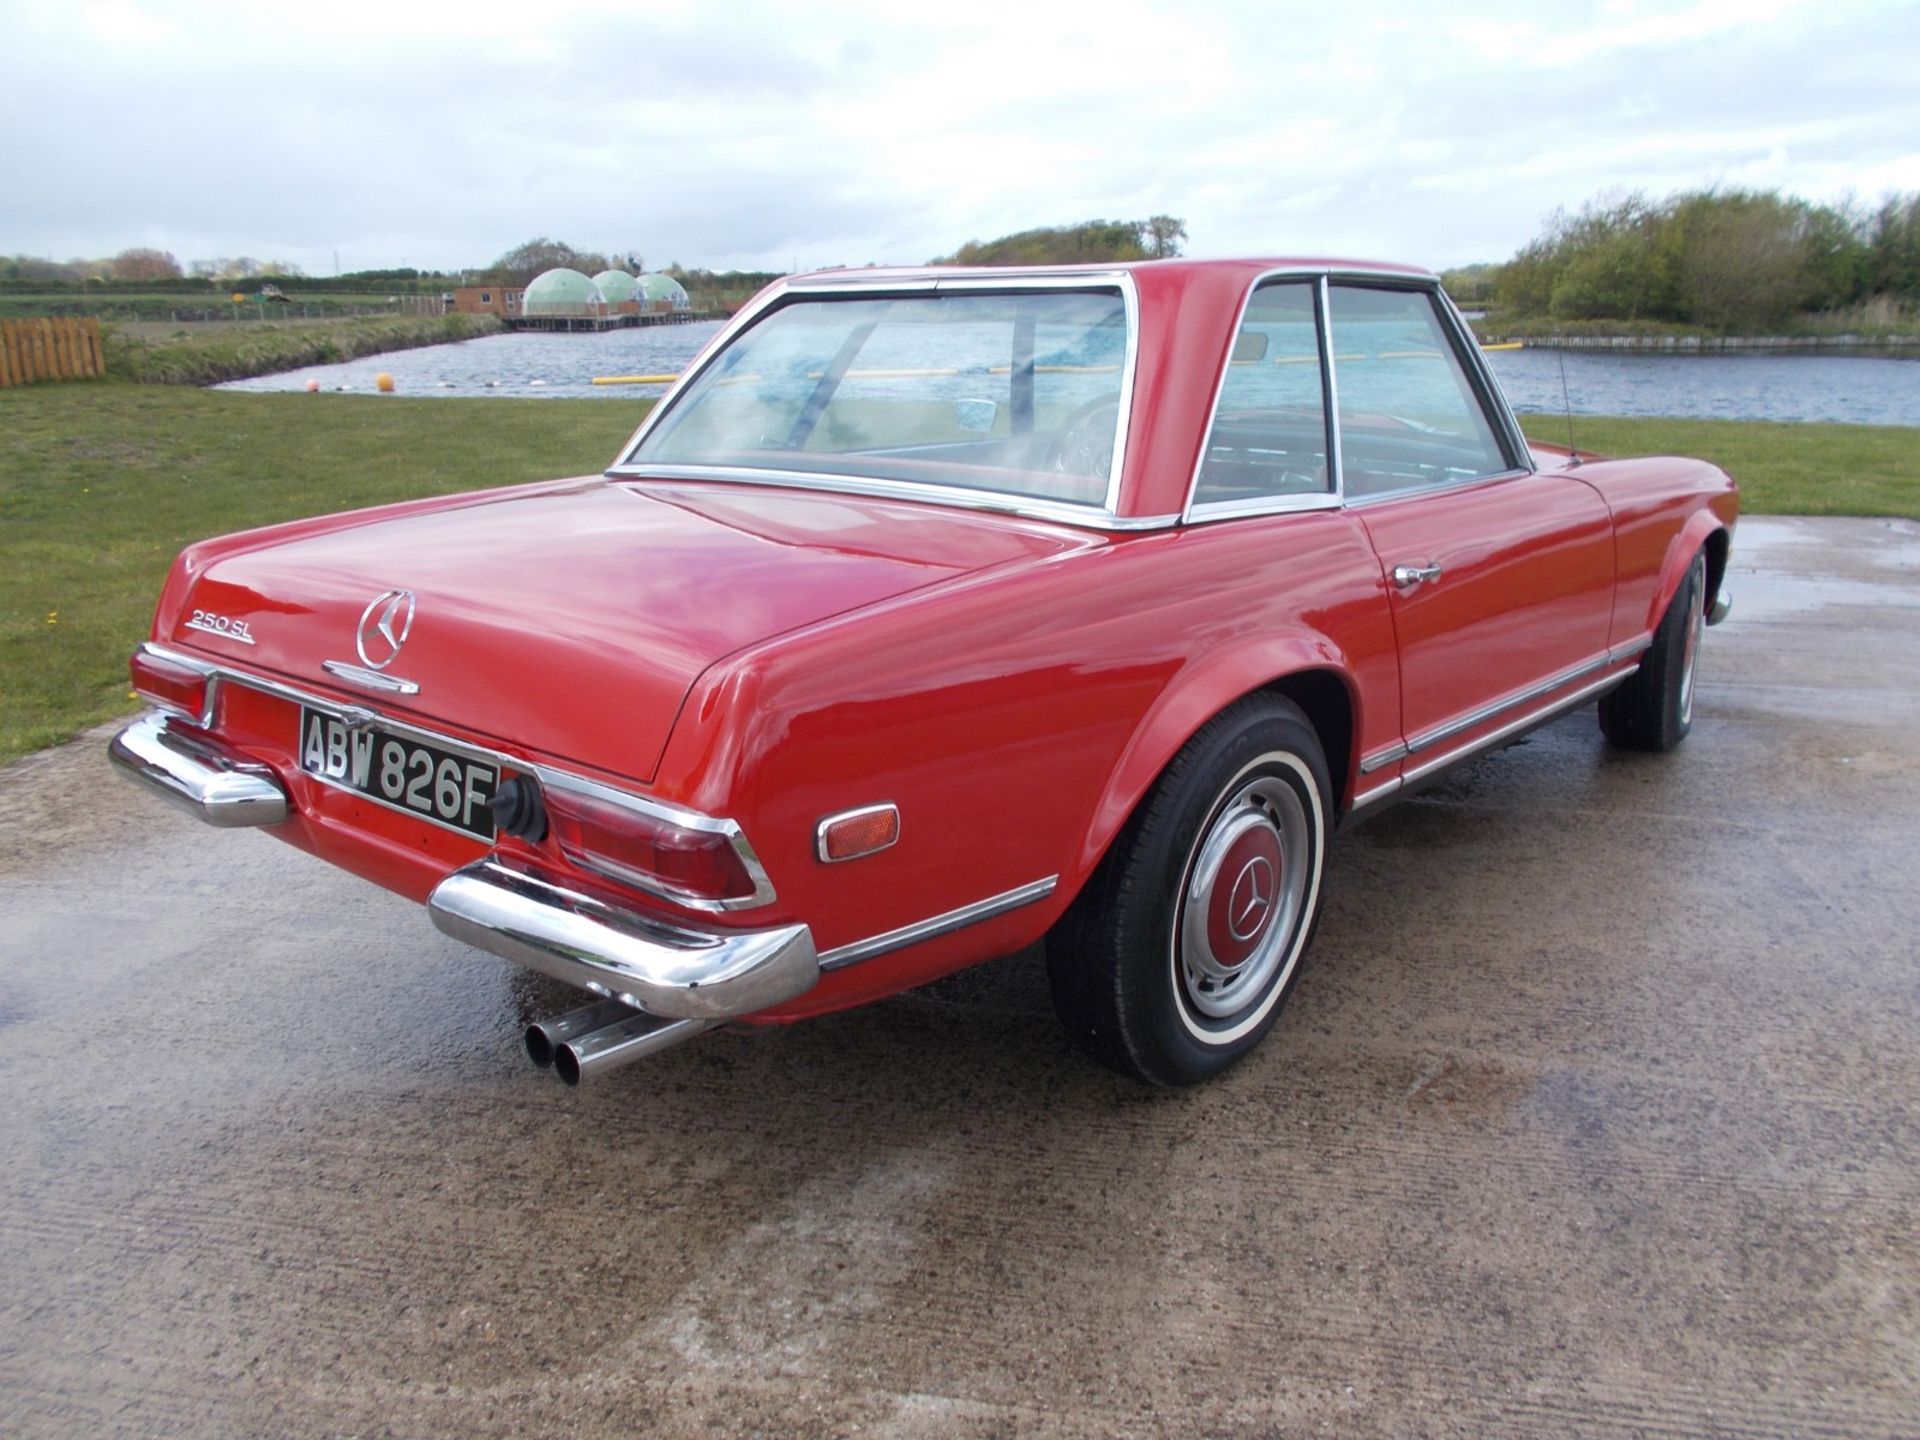 1968 (F) MERCEDES 250SL R107,2.5 LITRE PETROL AUTOMATIC, LEFT HAND DRIVE, FULLY UK REGISTERED*NO VAT - Image 6 of 38